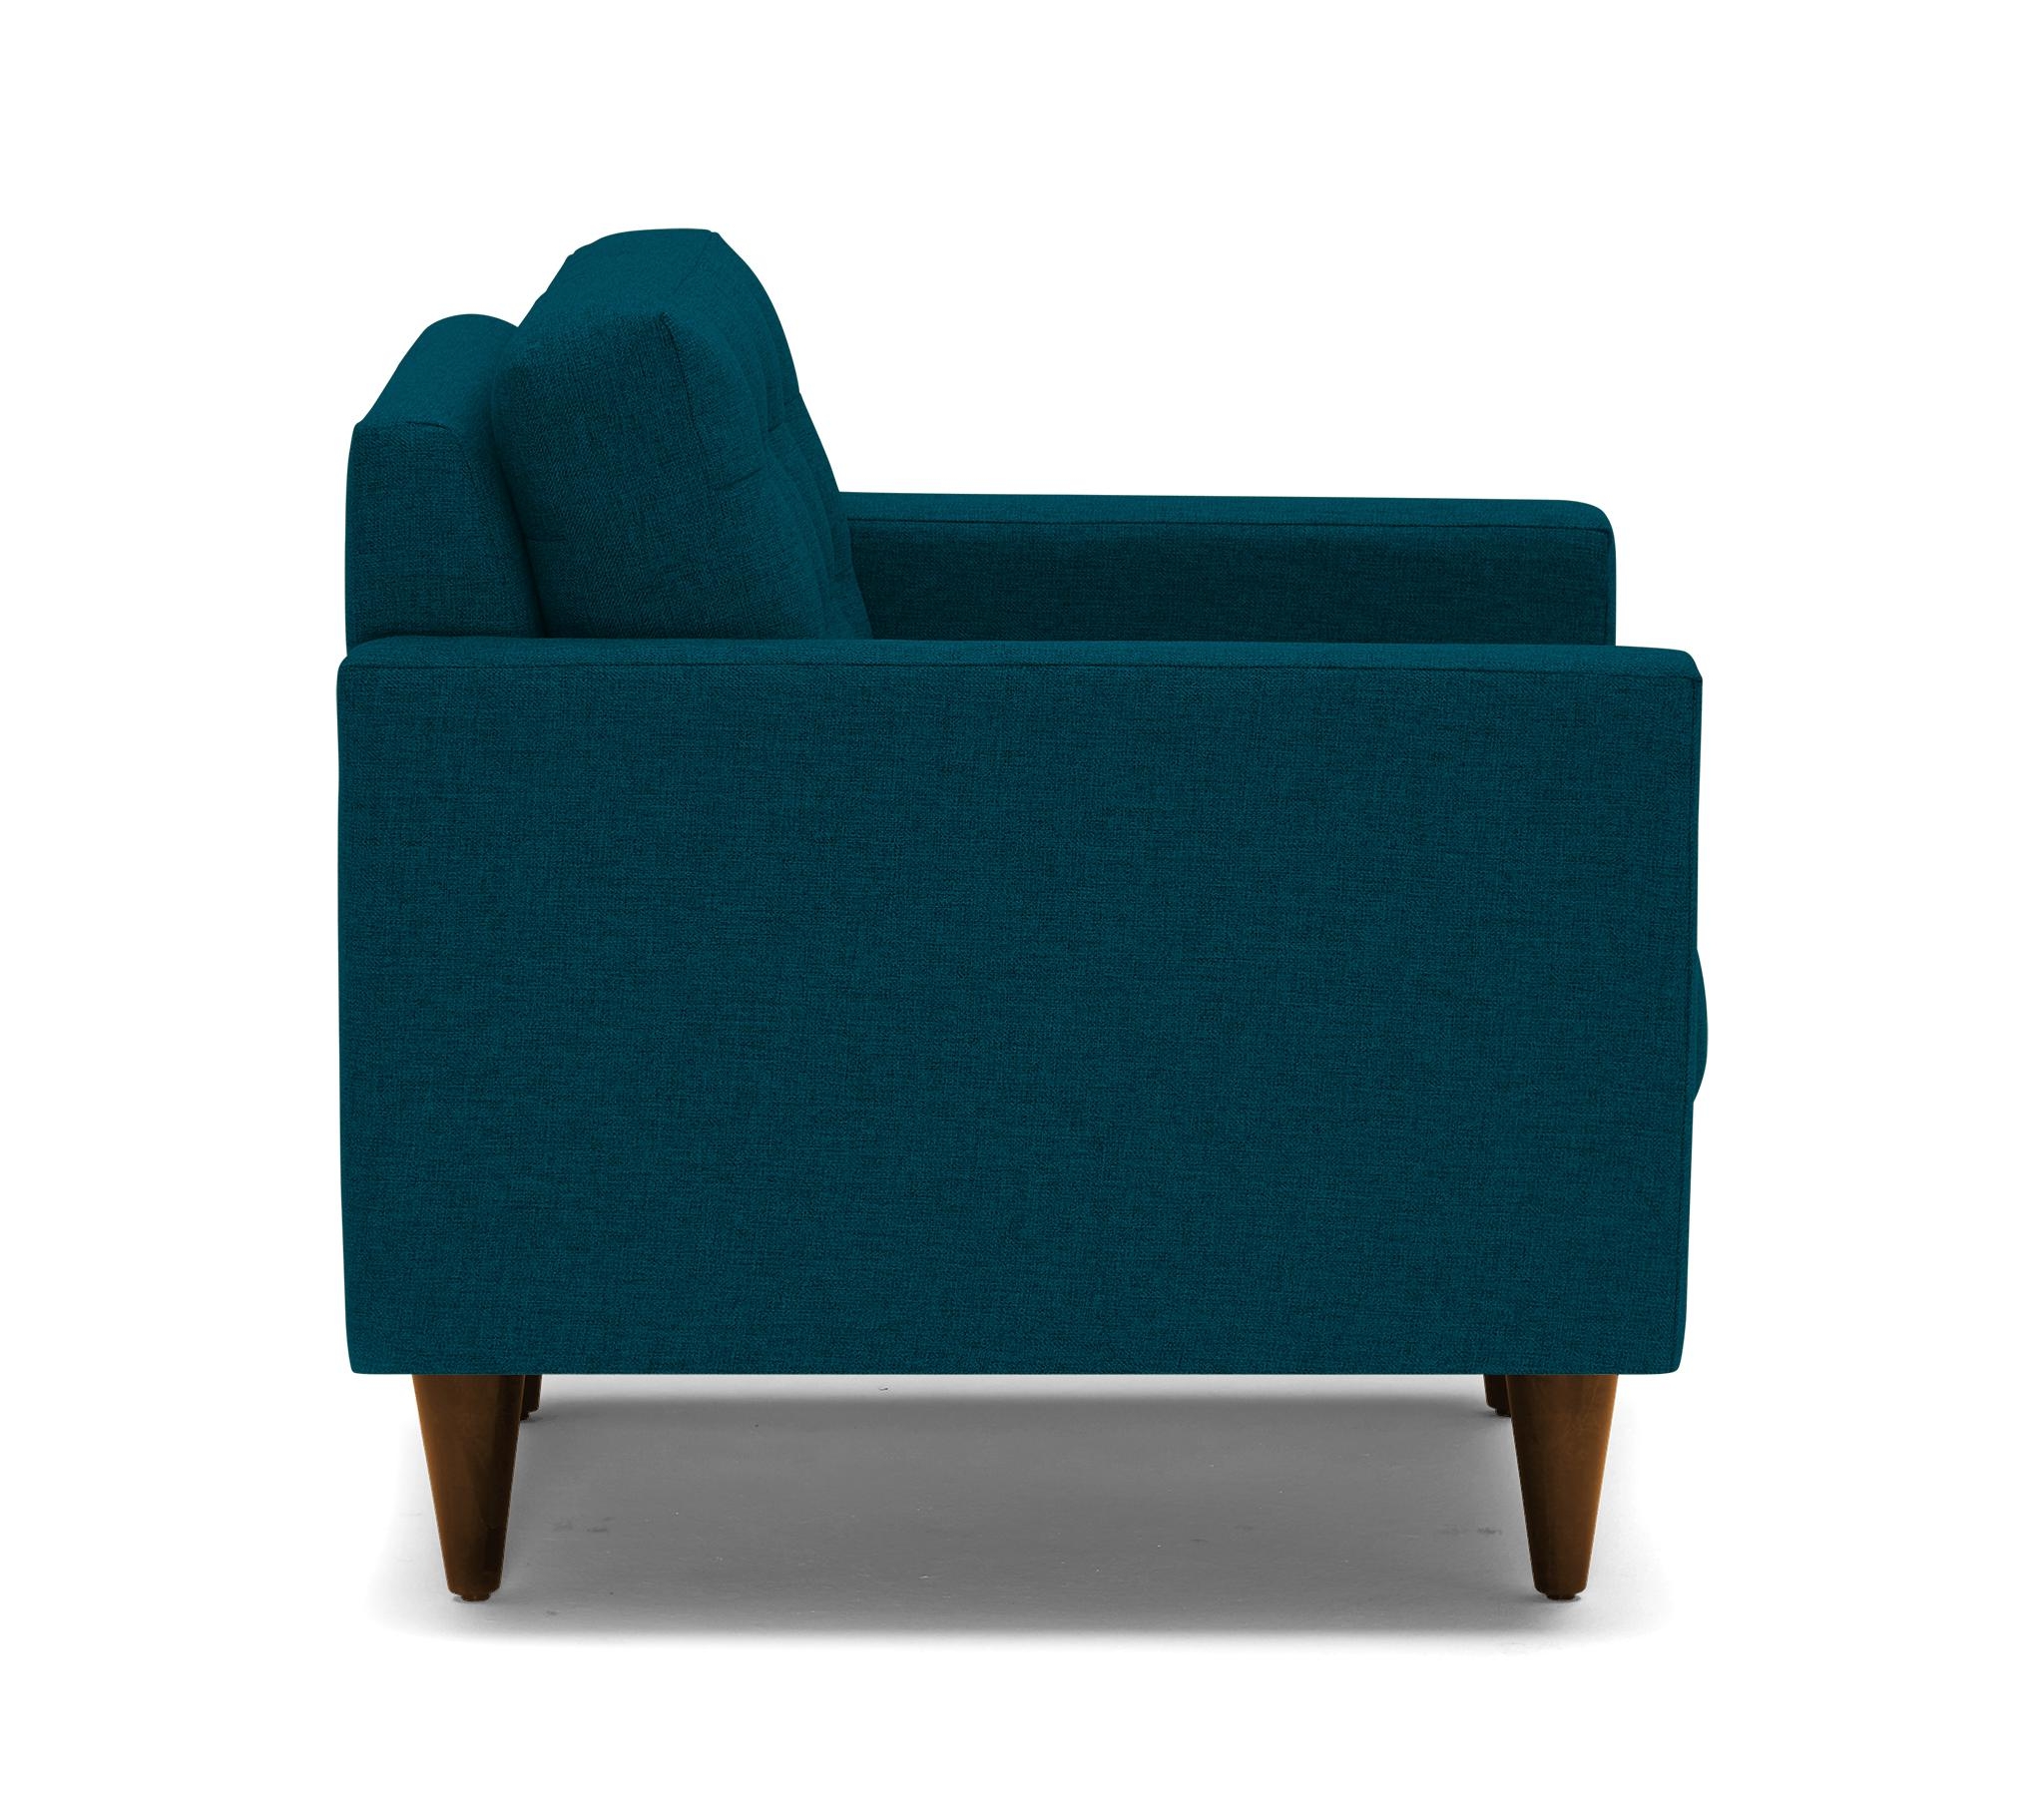 Blue Eliot Mid Century Modern Apartment Chair - Key Largo Zenith Teal - Mocha - Image 2